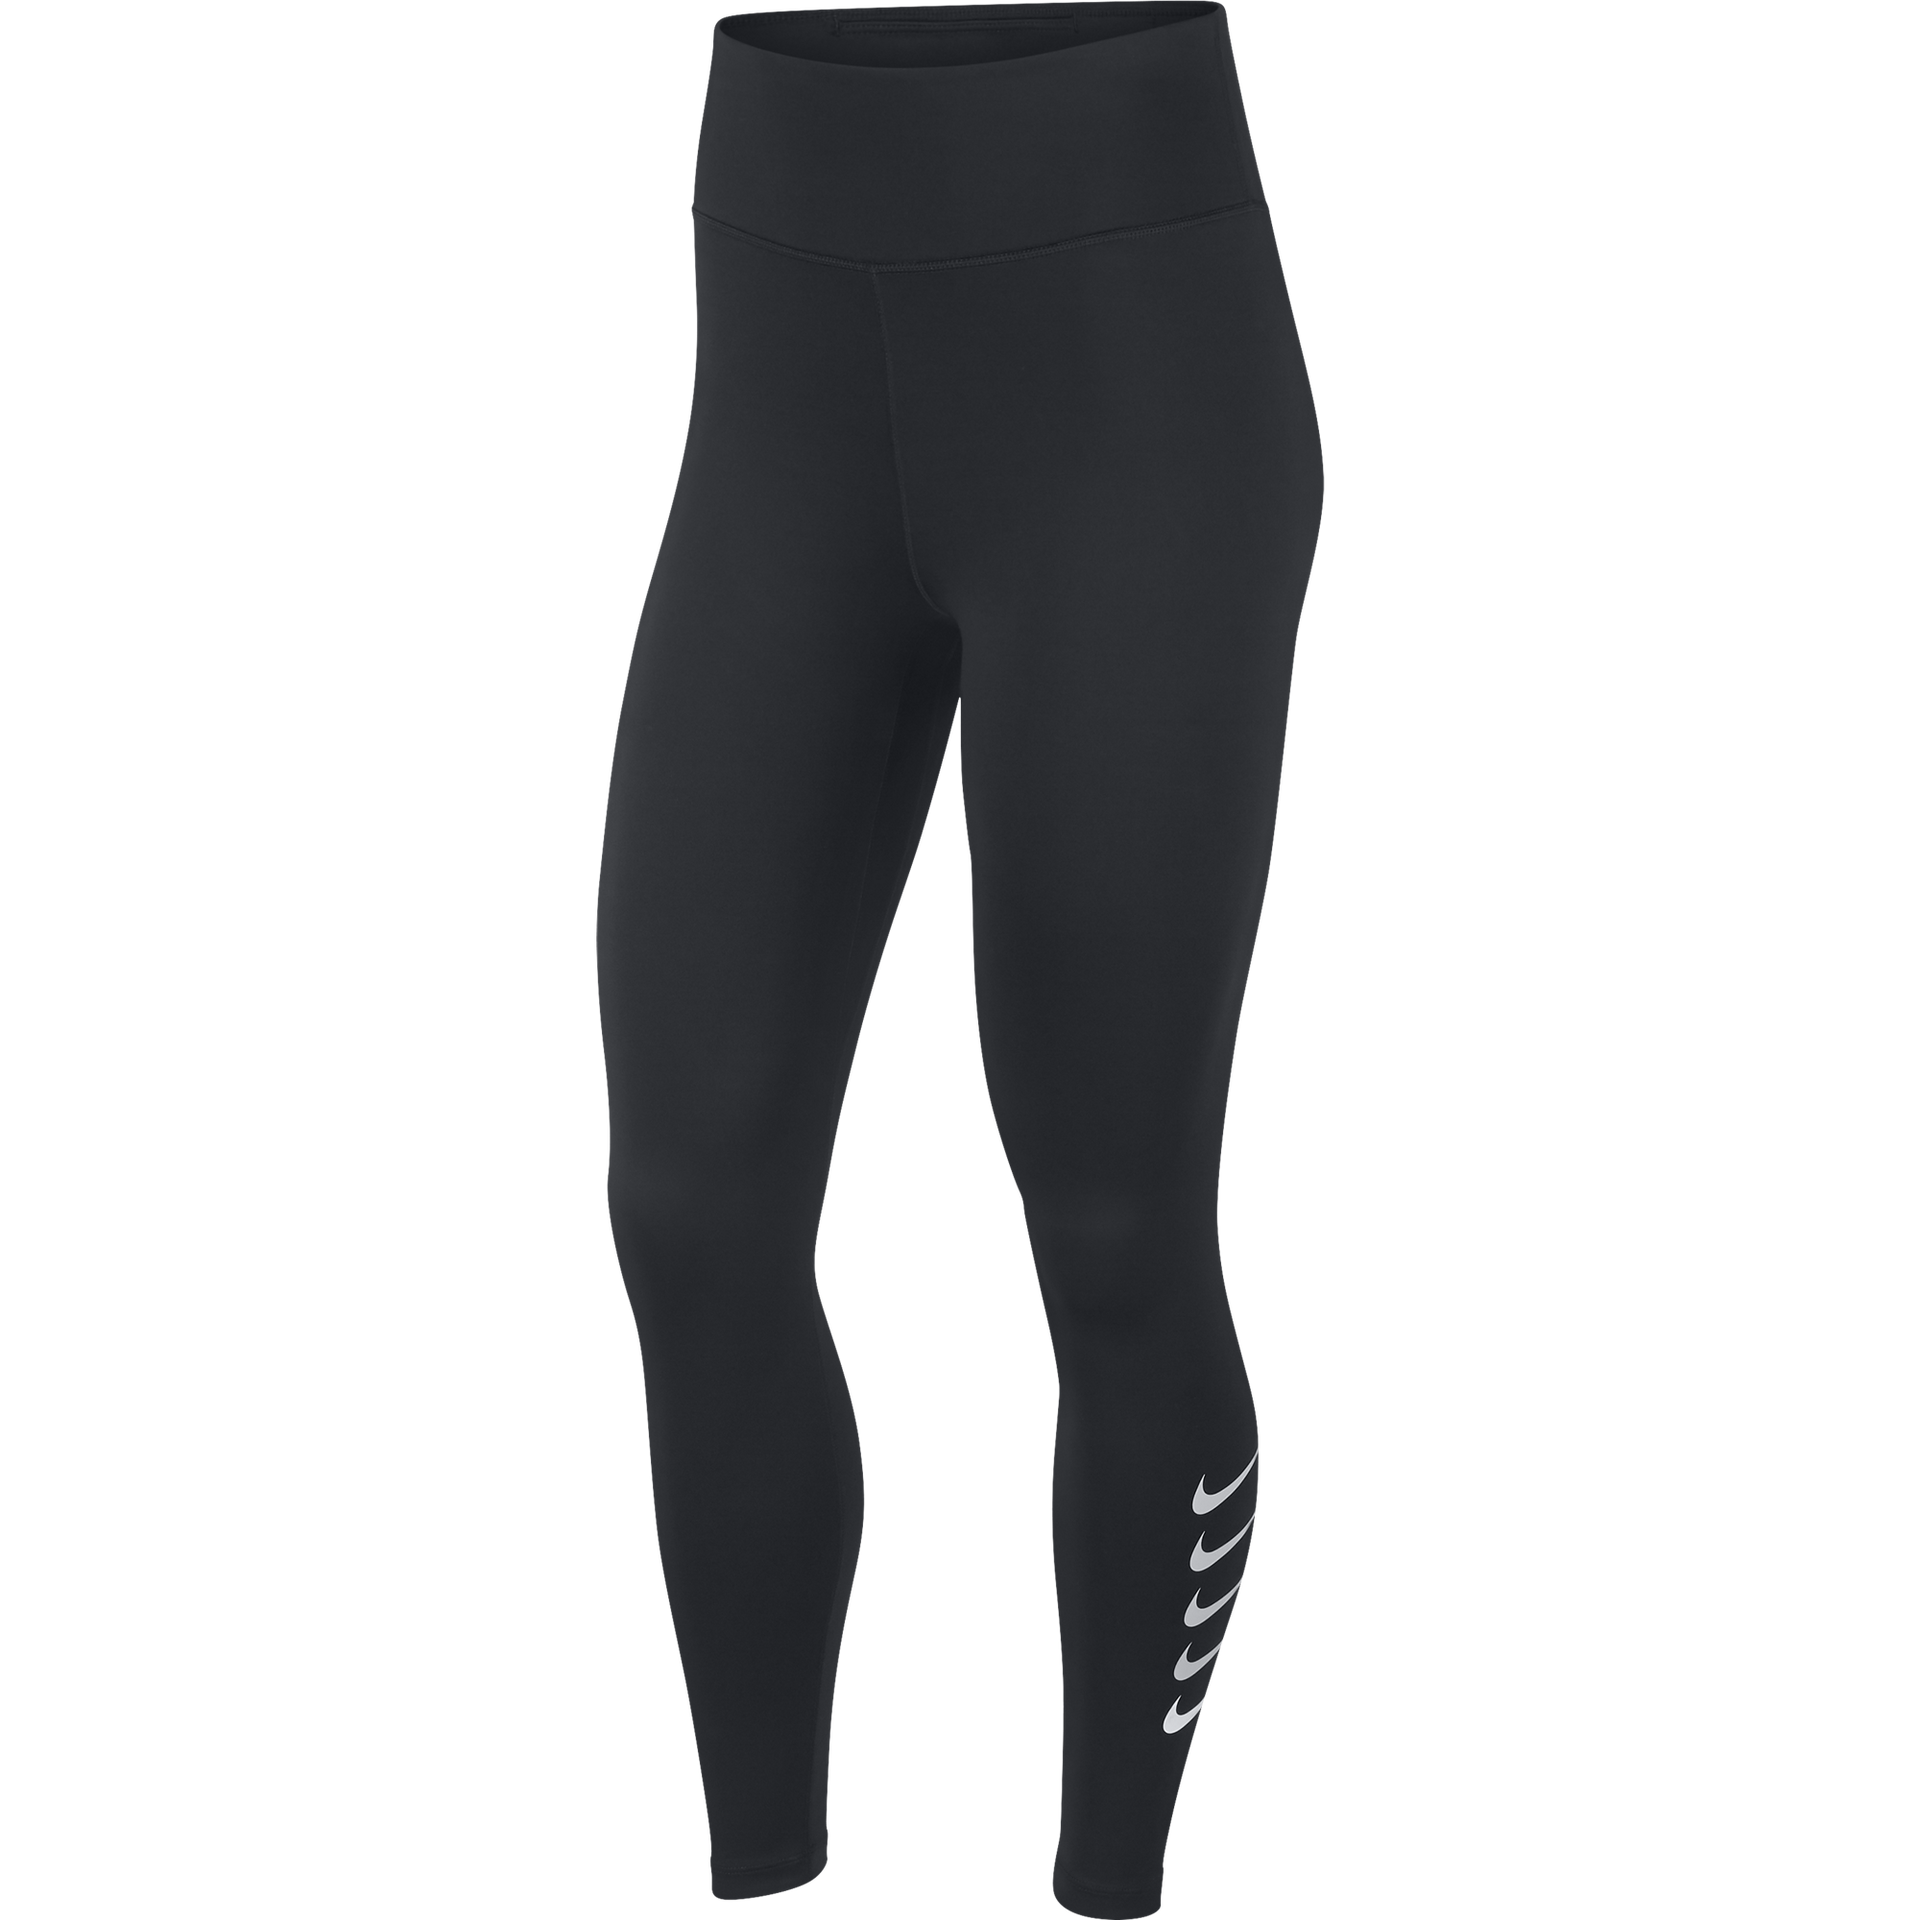 Nike Women's Swoosh 7/8 Tights - Black/Reflective Silver - Running